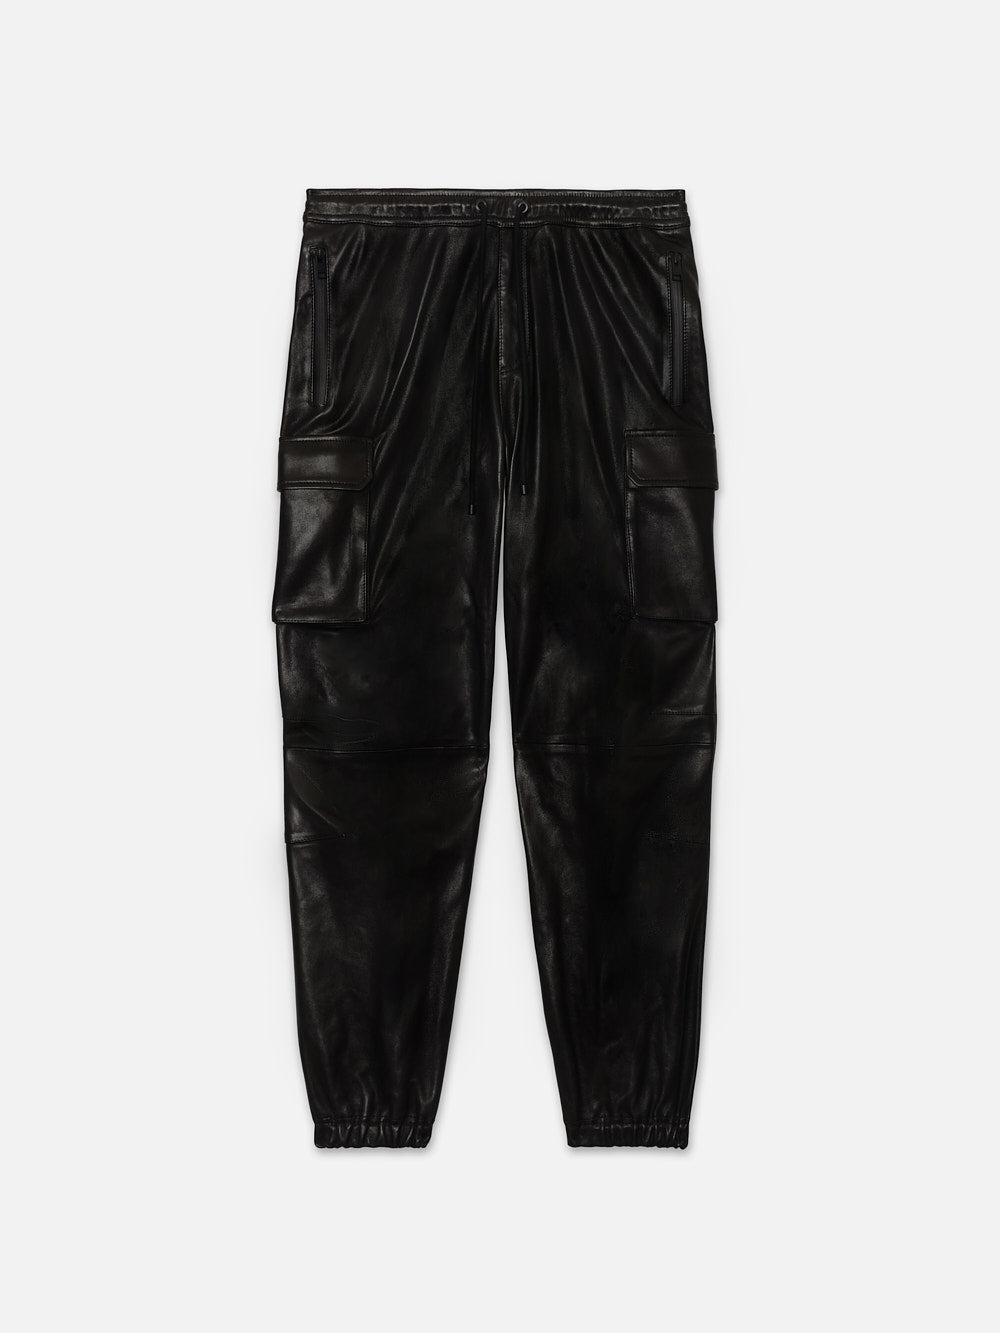 Zara + Faux Leather Cargo Pants